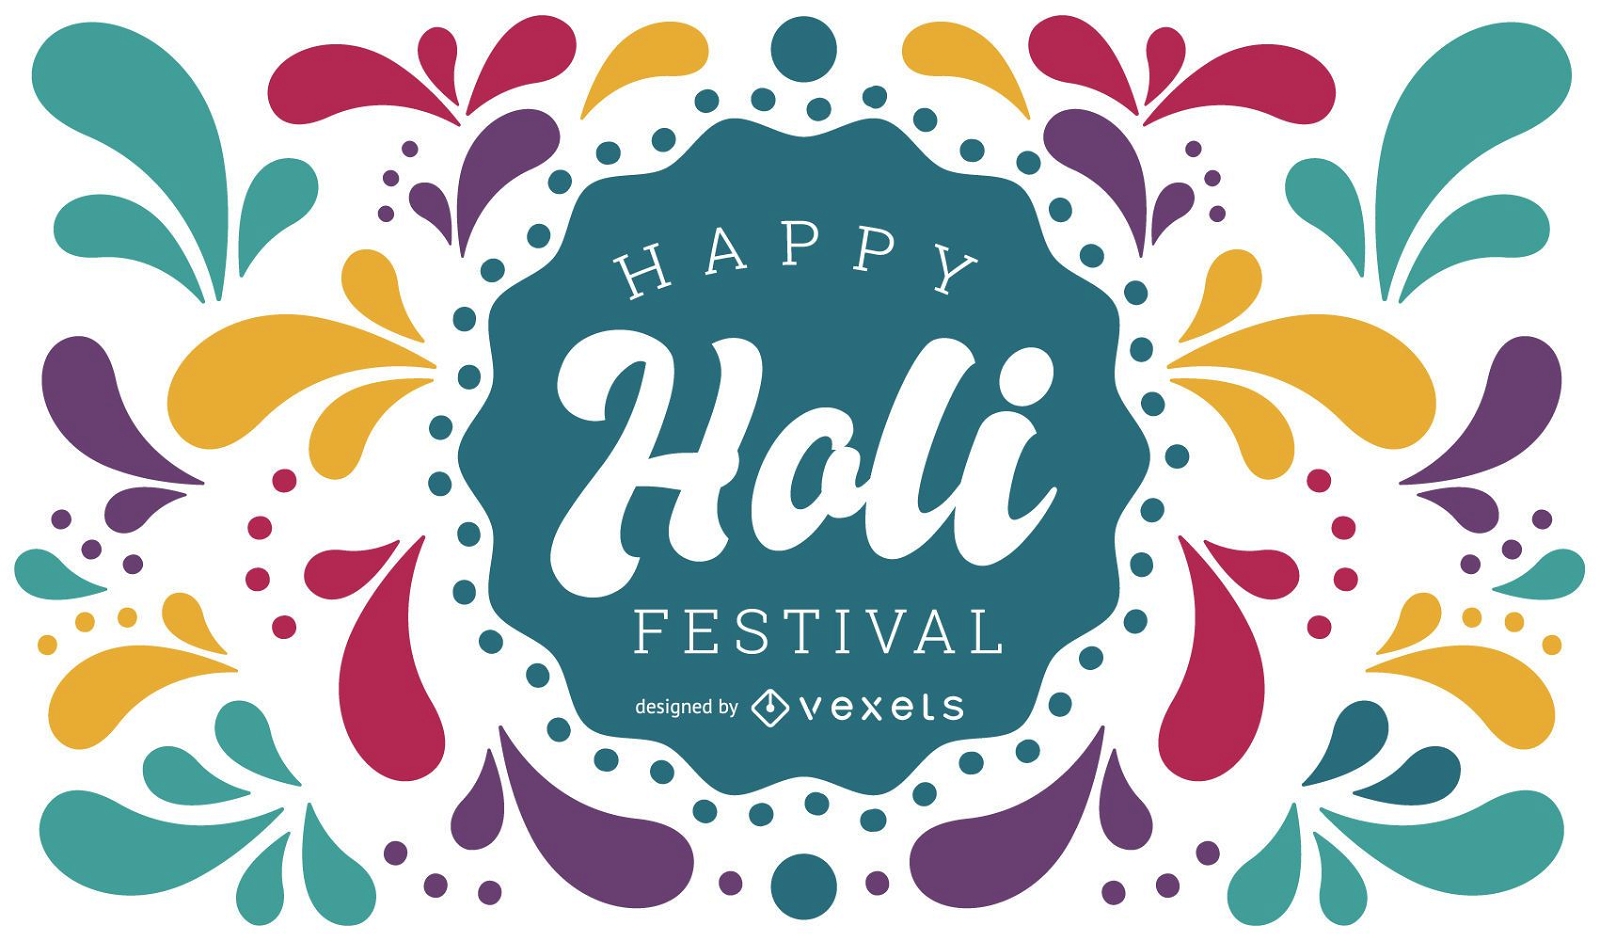 Happy Holi Festival Design